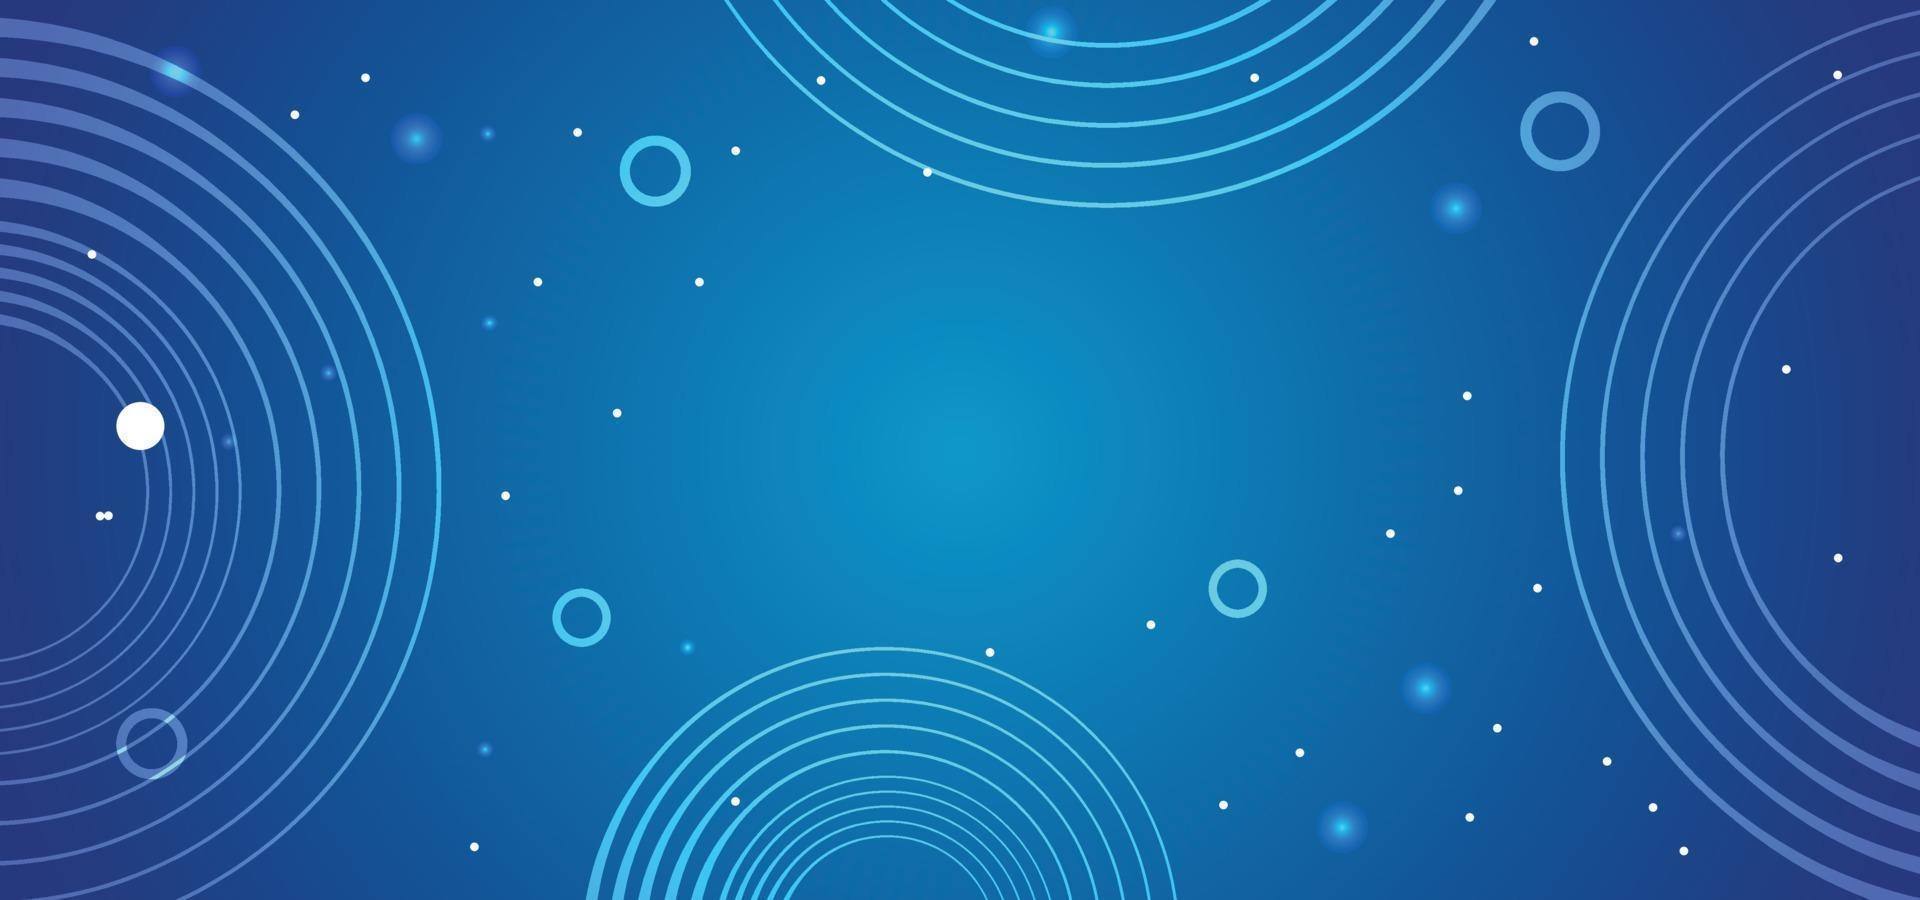 abstrakt blå cirklar teknik bakgrund eller banner vektor